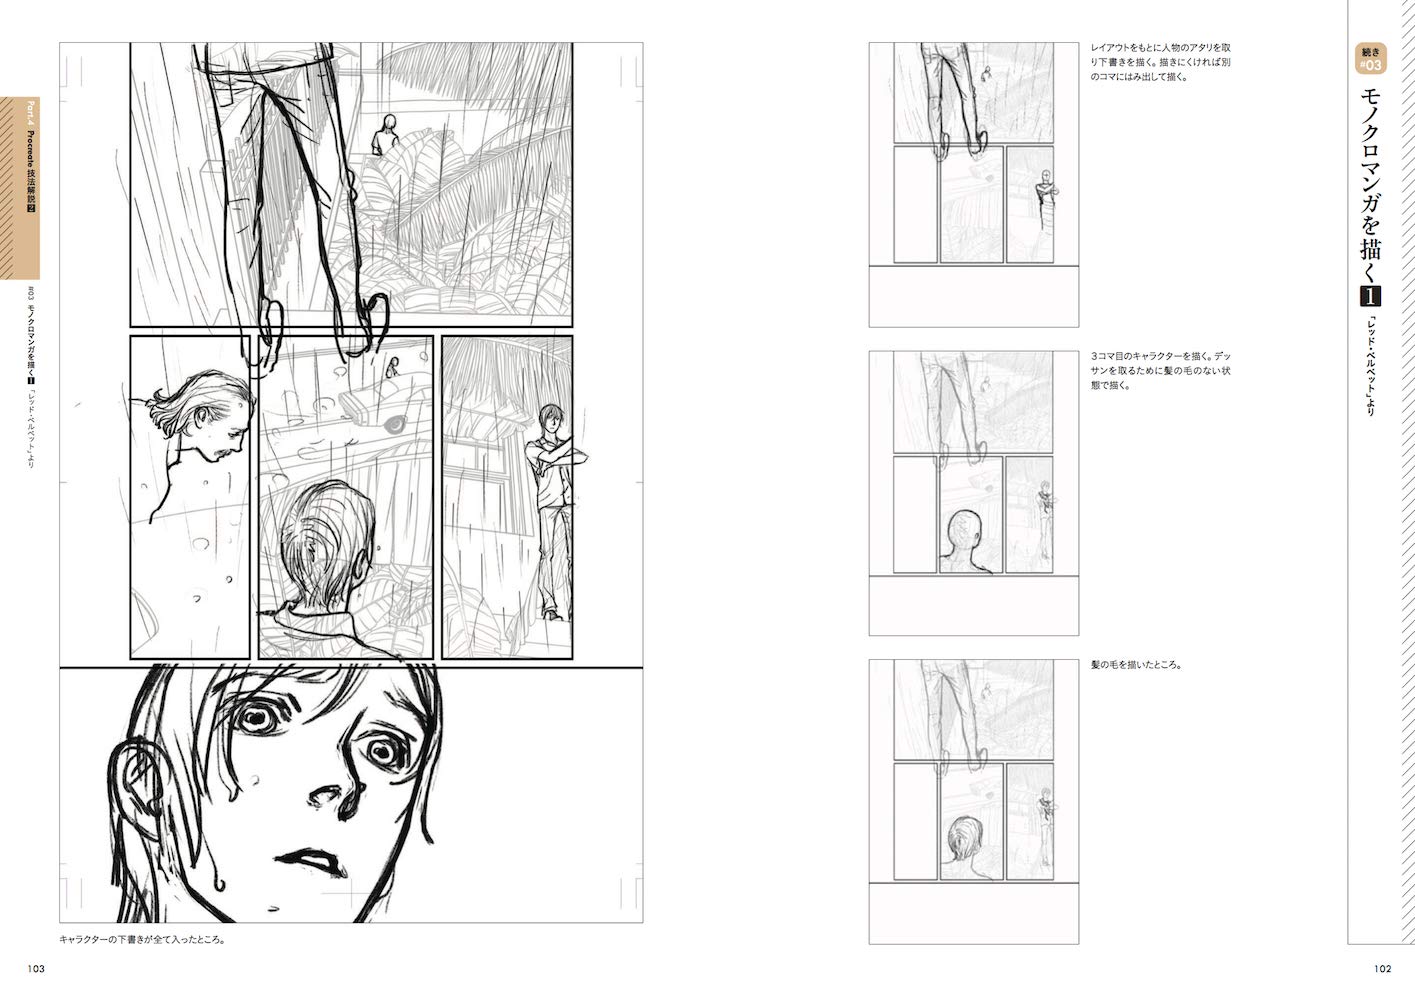 iPad Pro+Procreate, How To Draw Manga and Illustrations